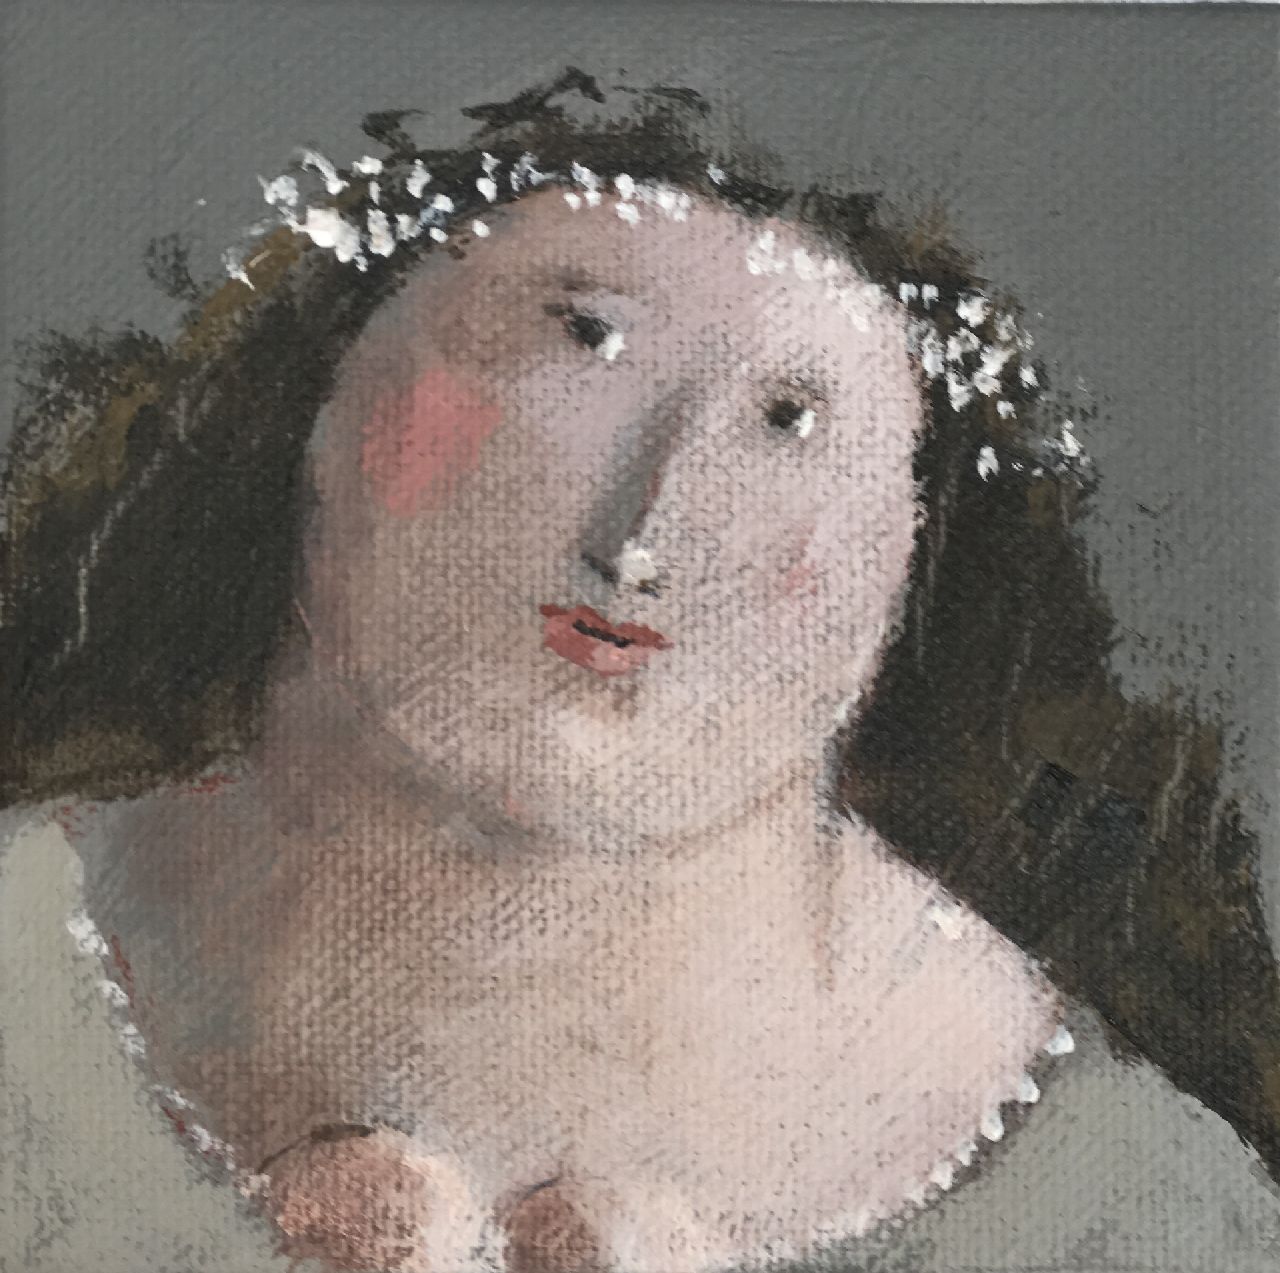 Hemert E. van | Evert van Hemert, Maria met gipskruidkrans, acryl op doek 10,1 x 10,1 cm, gesigneerd onderkant doekomslag